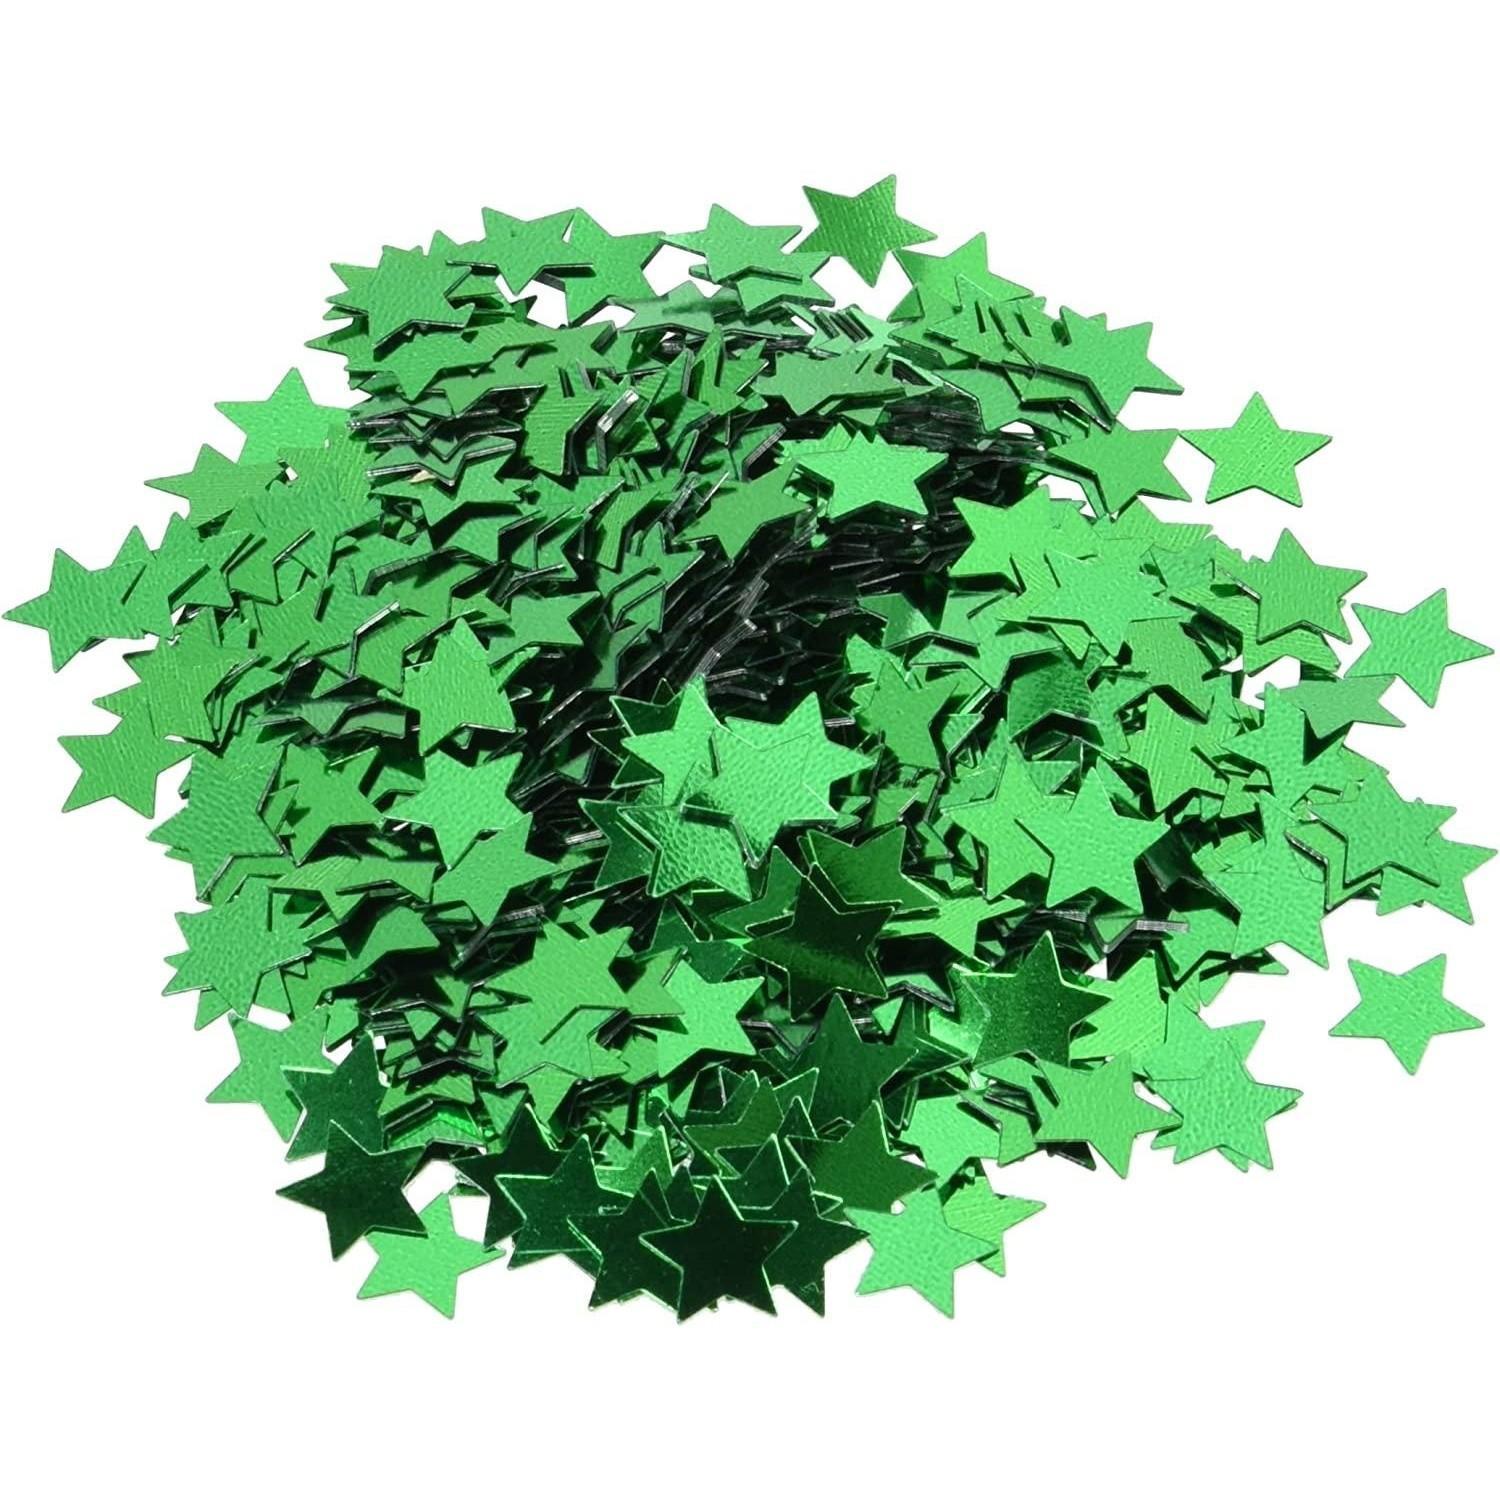 Amscan Metal Star Confetti (Green) (One Size)